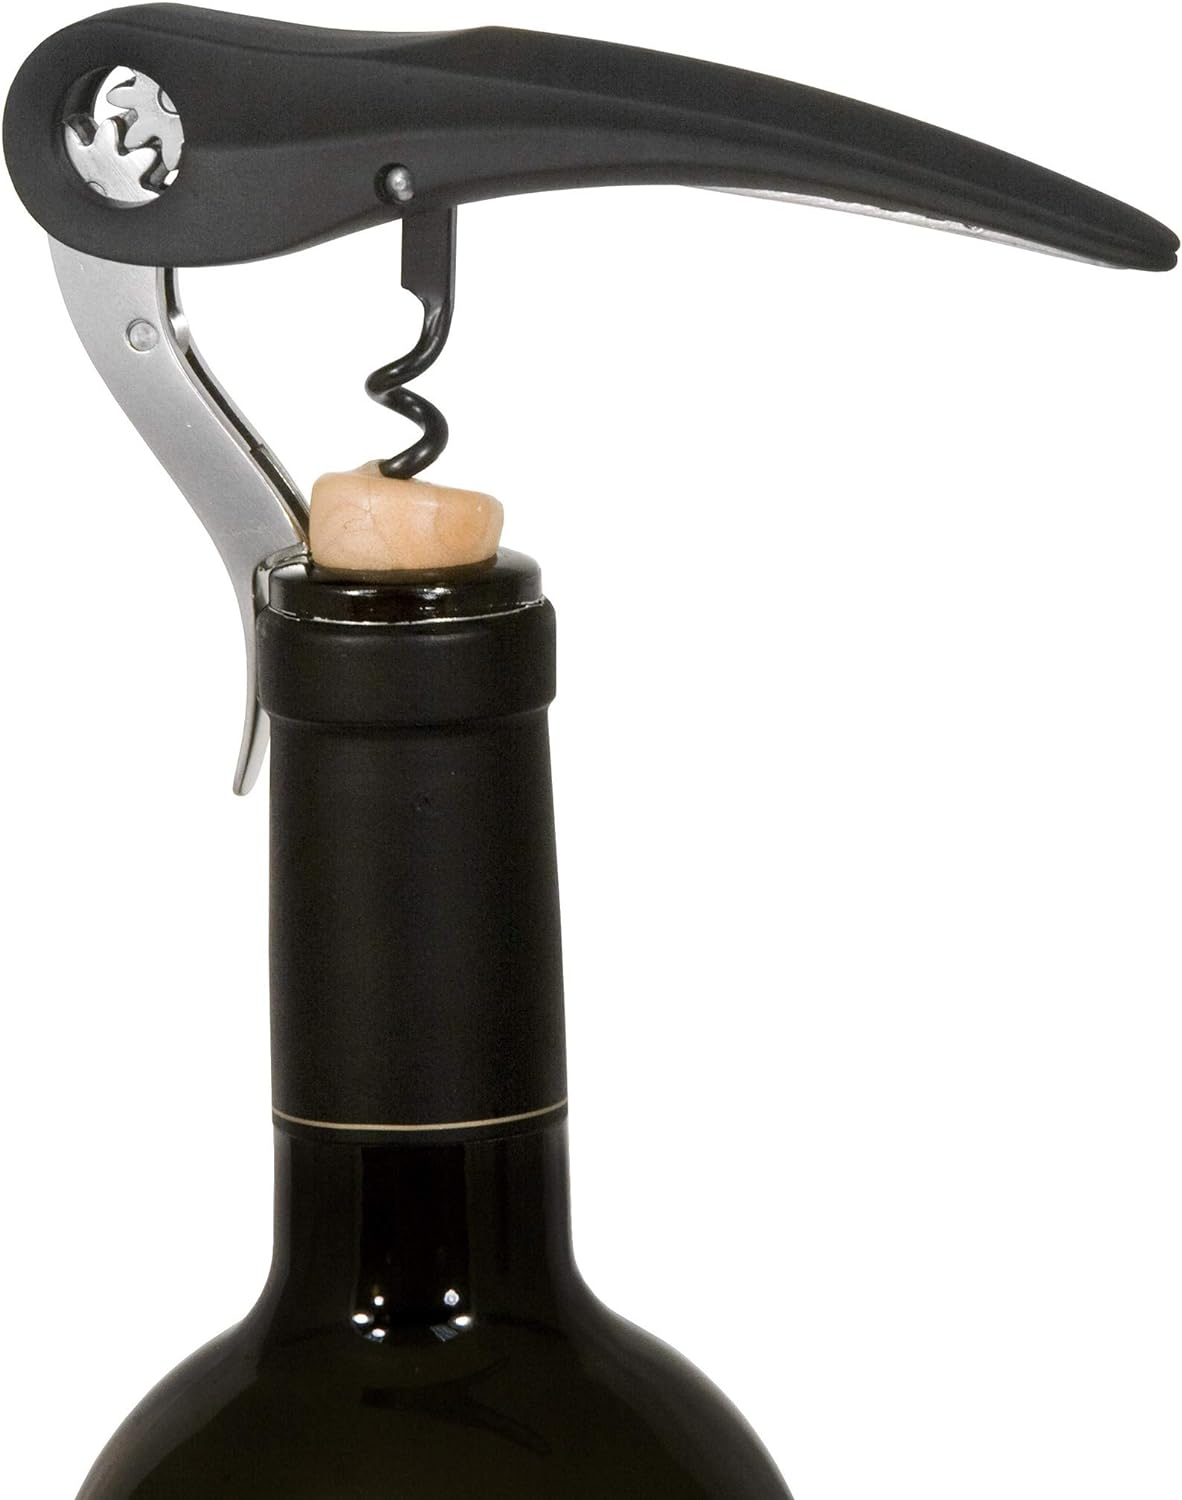 Waiters Friend Corkscrew with worn screwed into cork in a wine bottle.